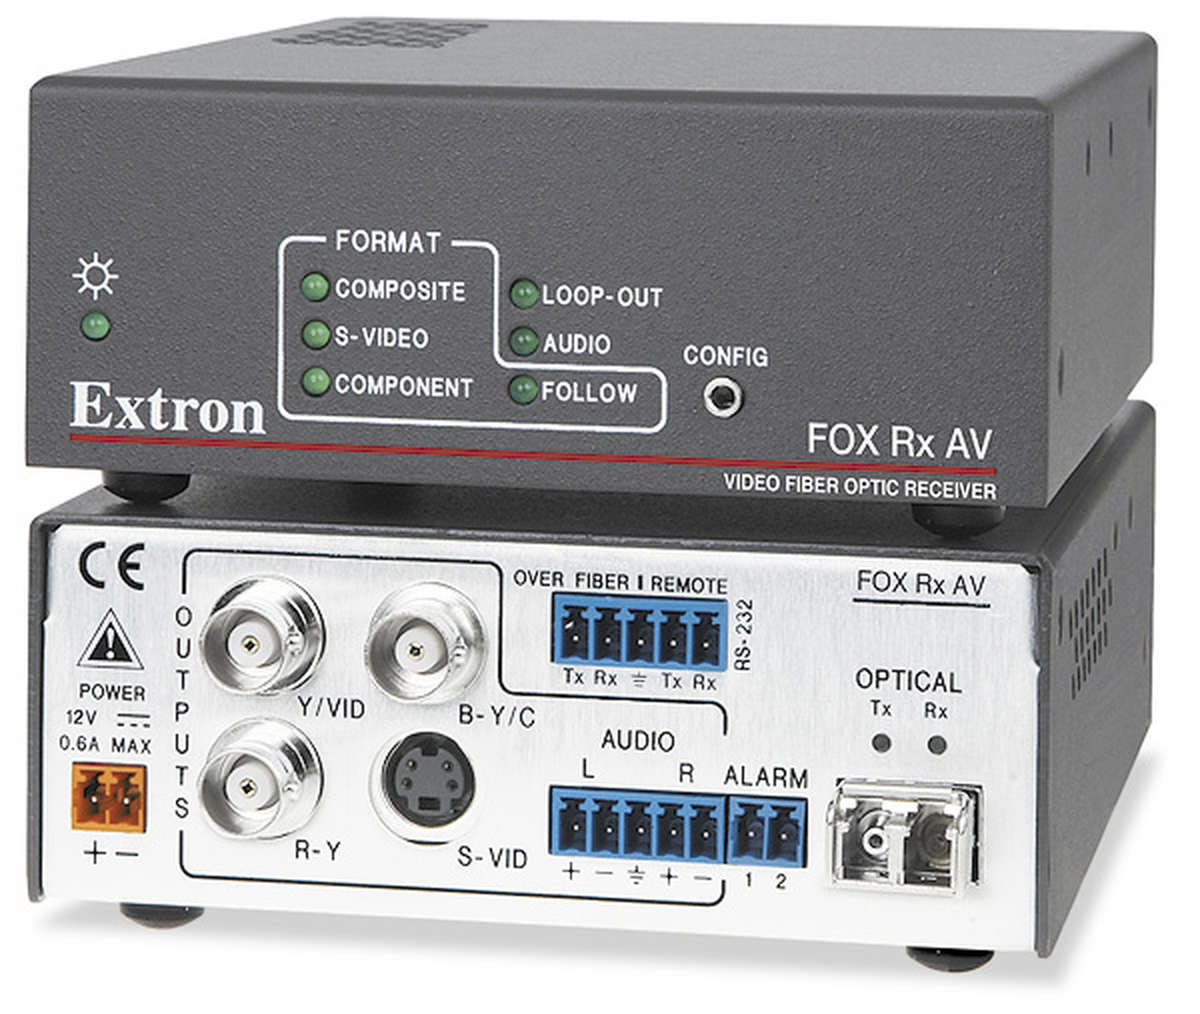 Extron FOX Rx AV SM 60-941-22  product image